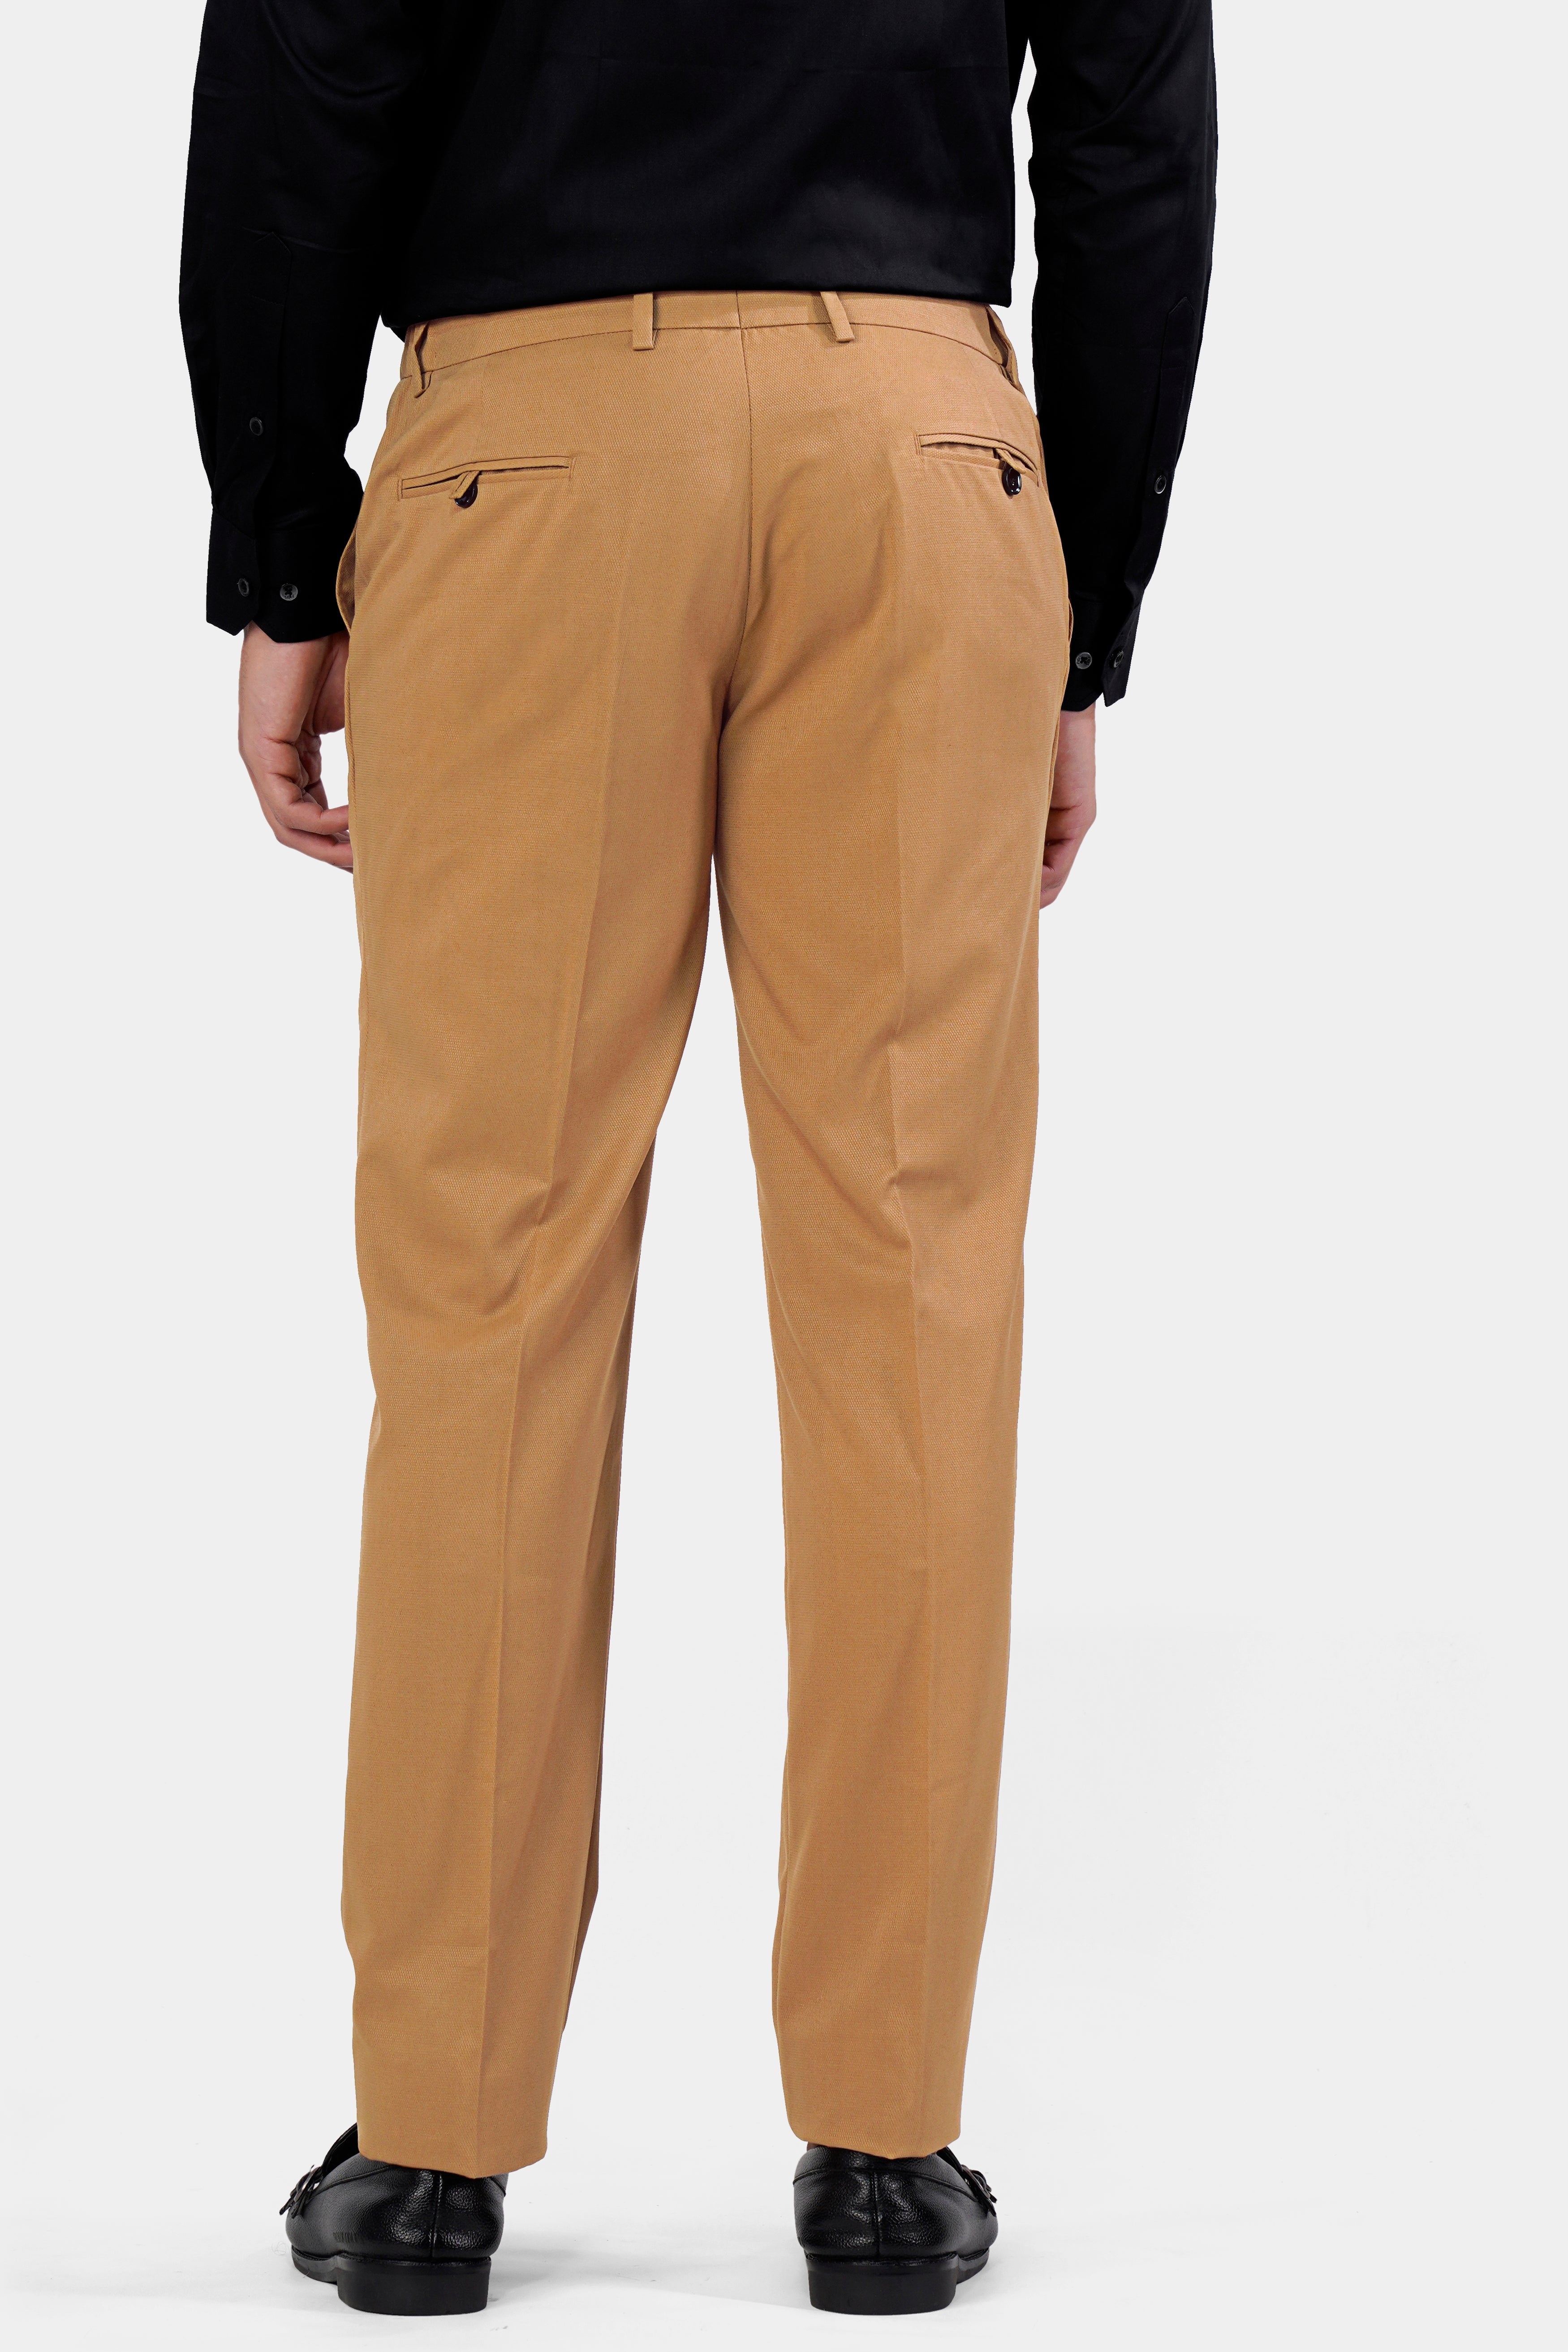 Hertling USA Beige Cotton or Wool Pleated Side Tab Trousers Pants 34x29 |  eBay